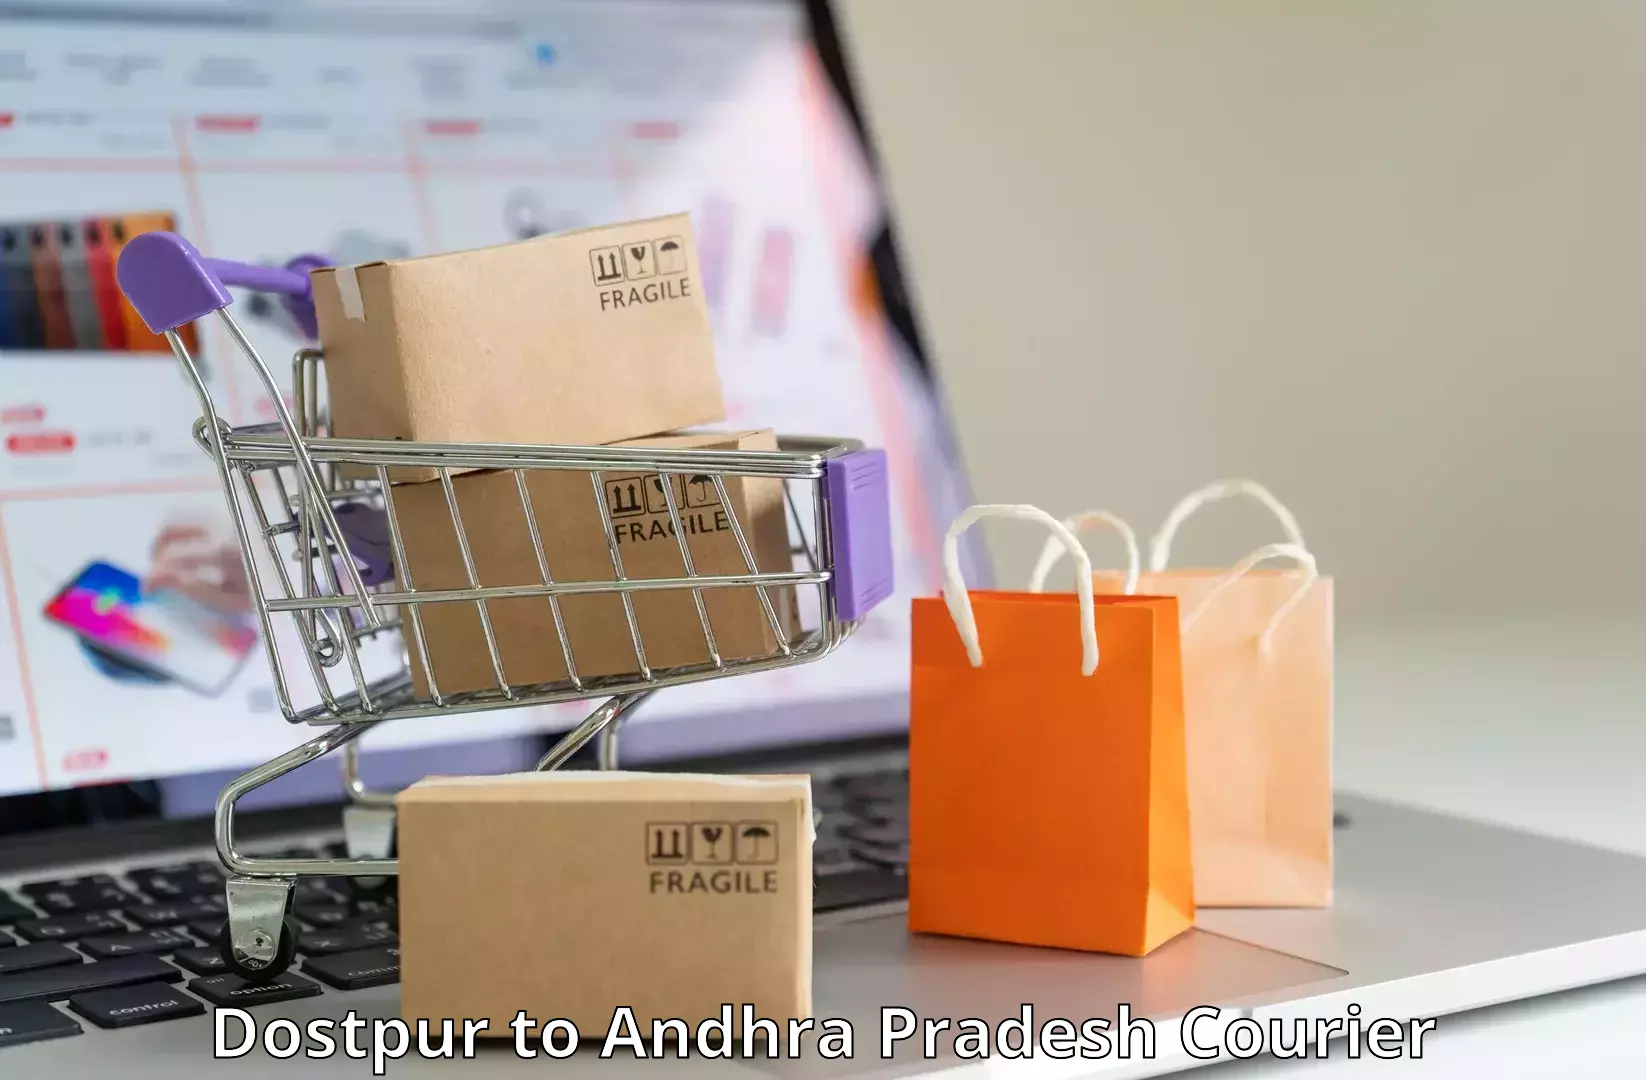 Regular parcel service Dostpur to Andhra Pradesh